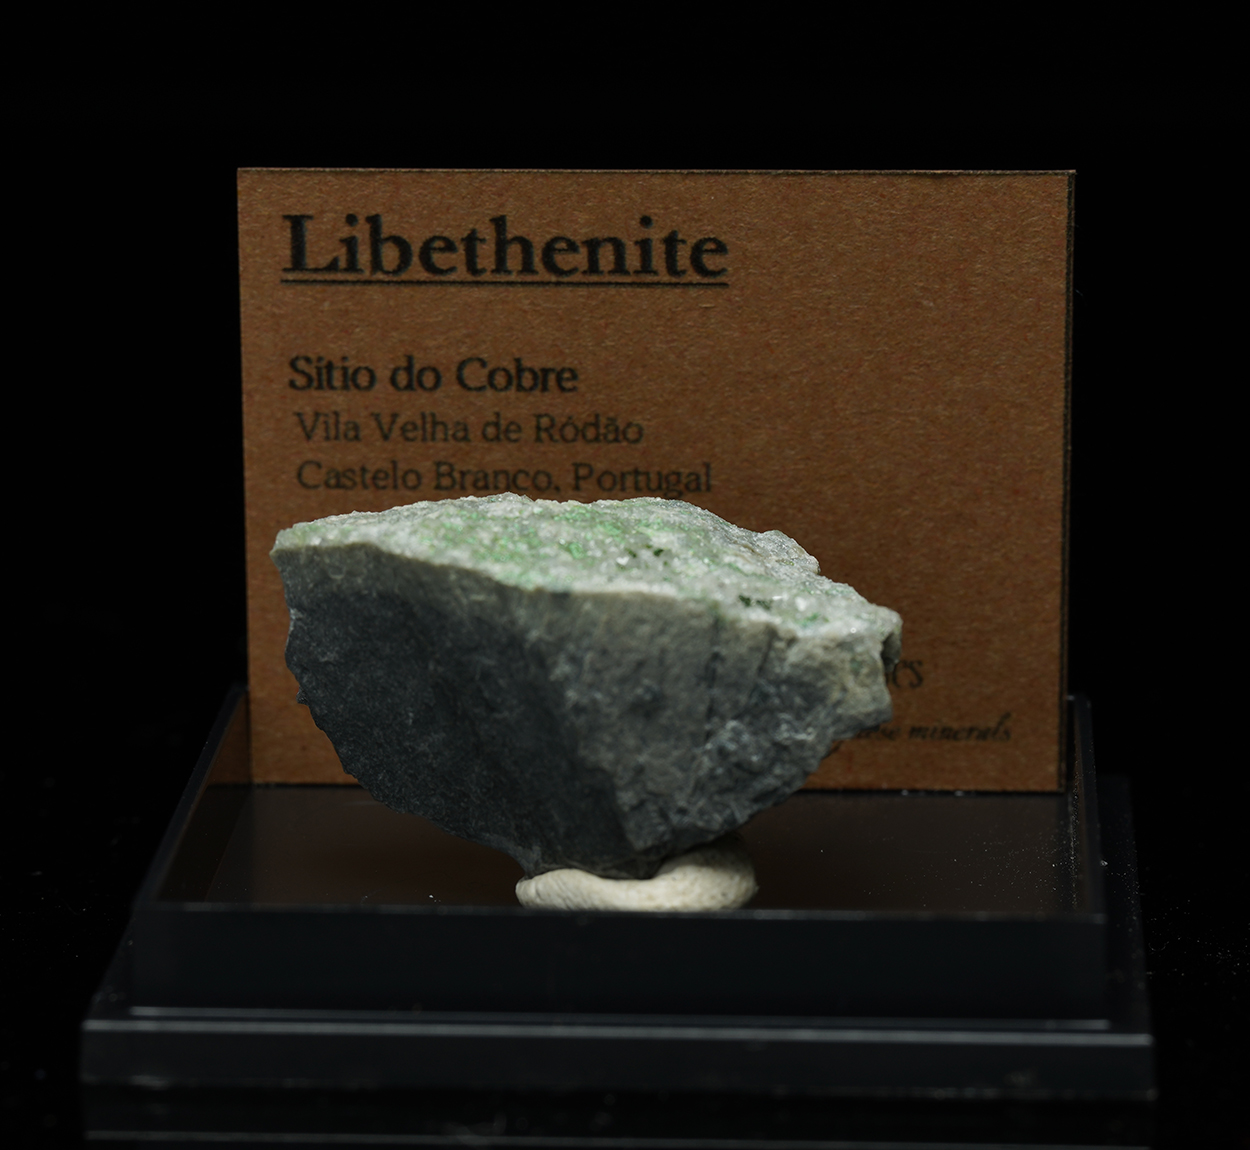 Libethenite